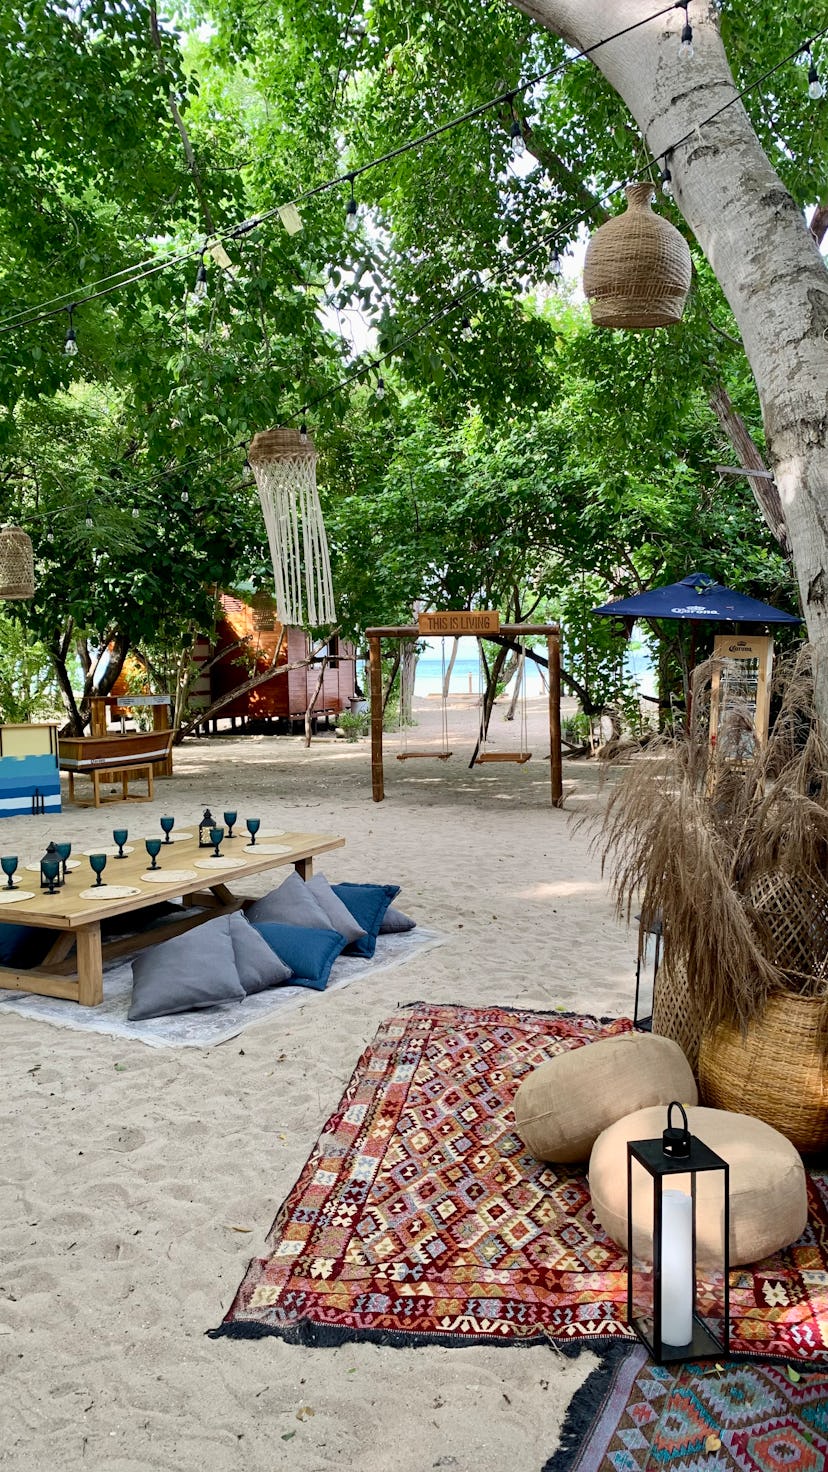 Corona Island had plenty of 'Gram-worthy photo opps and places to relax.